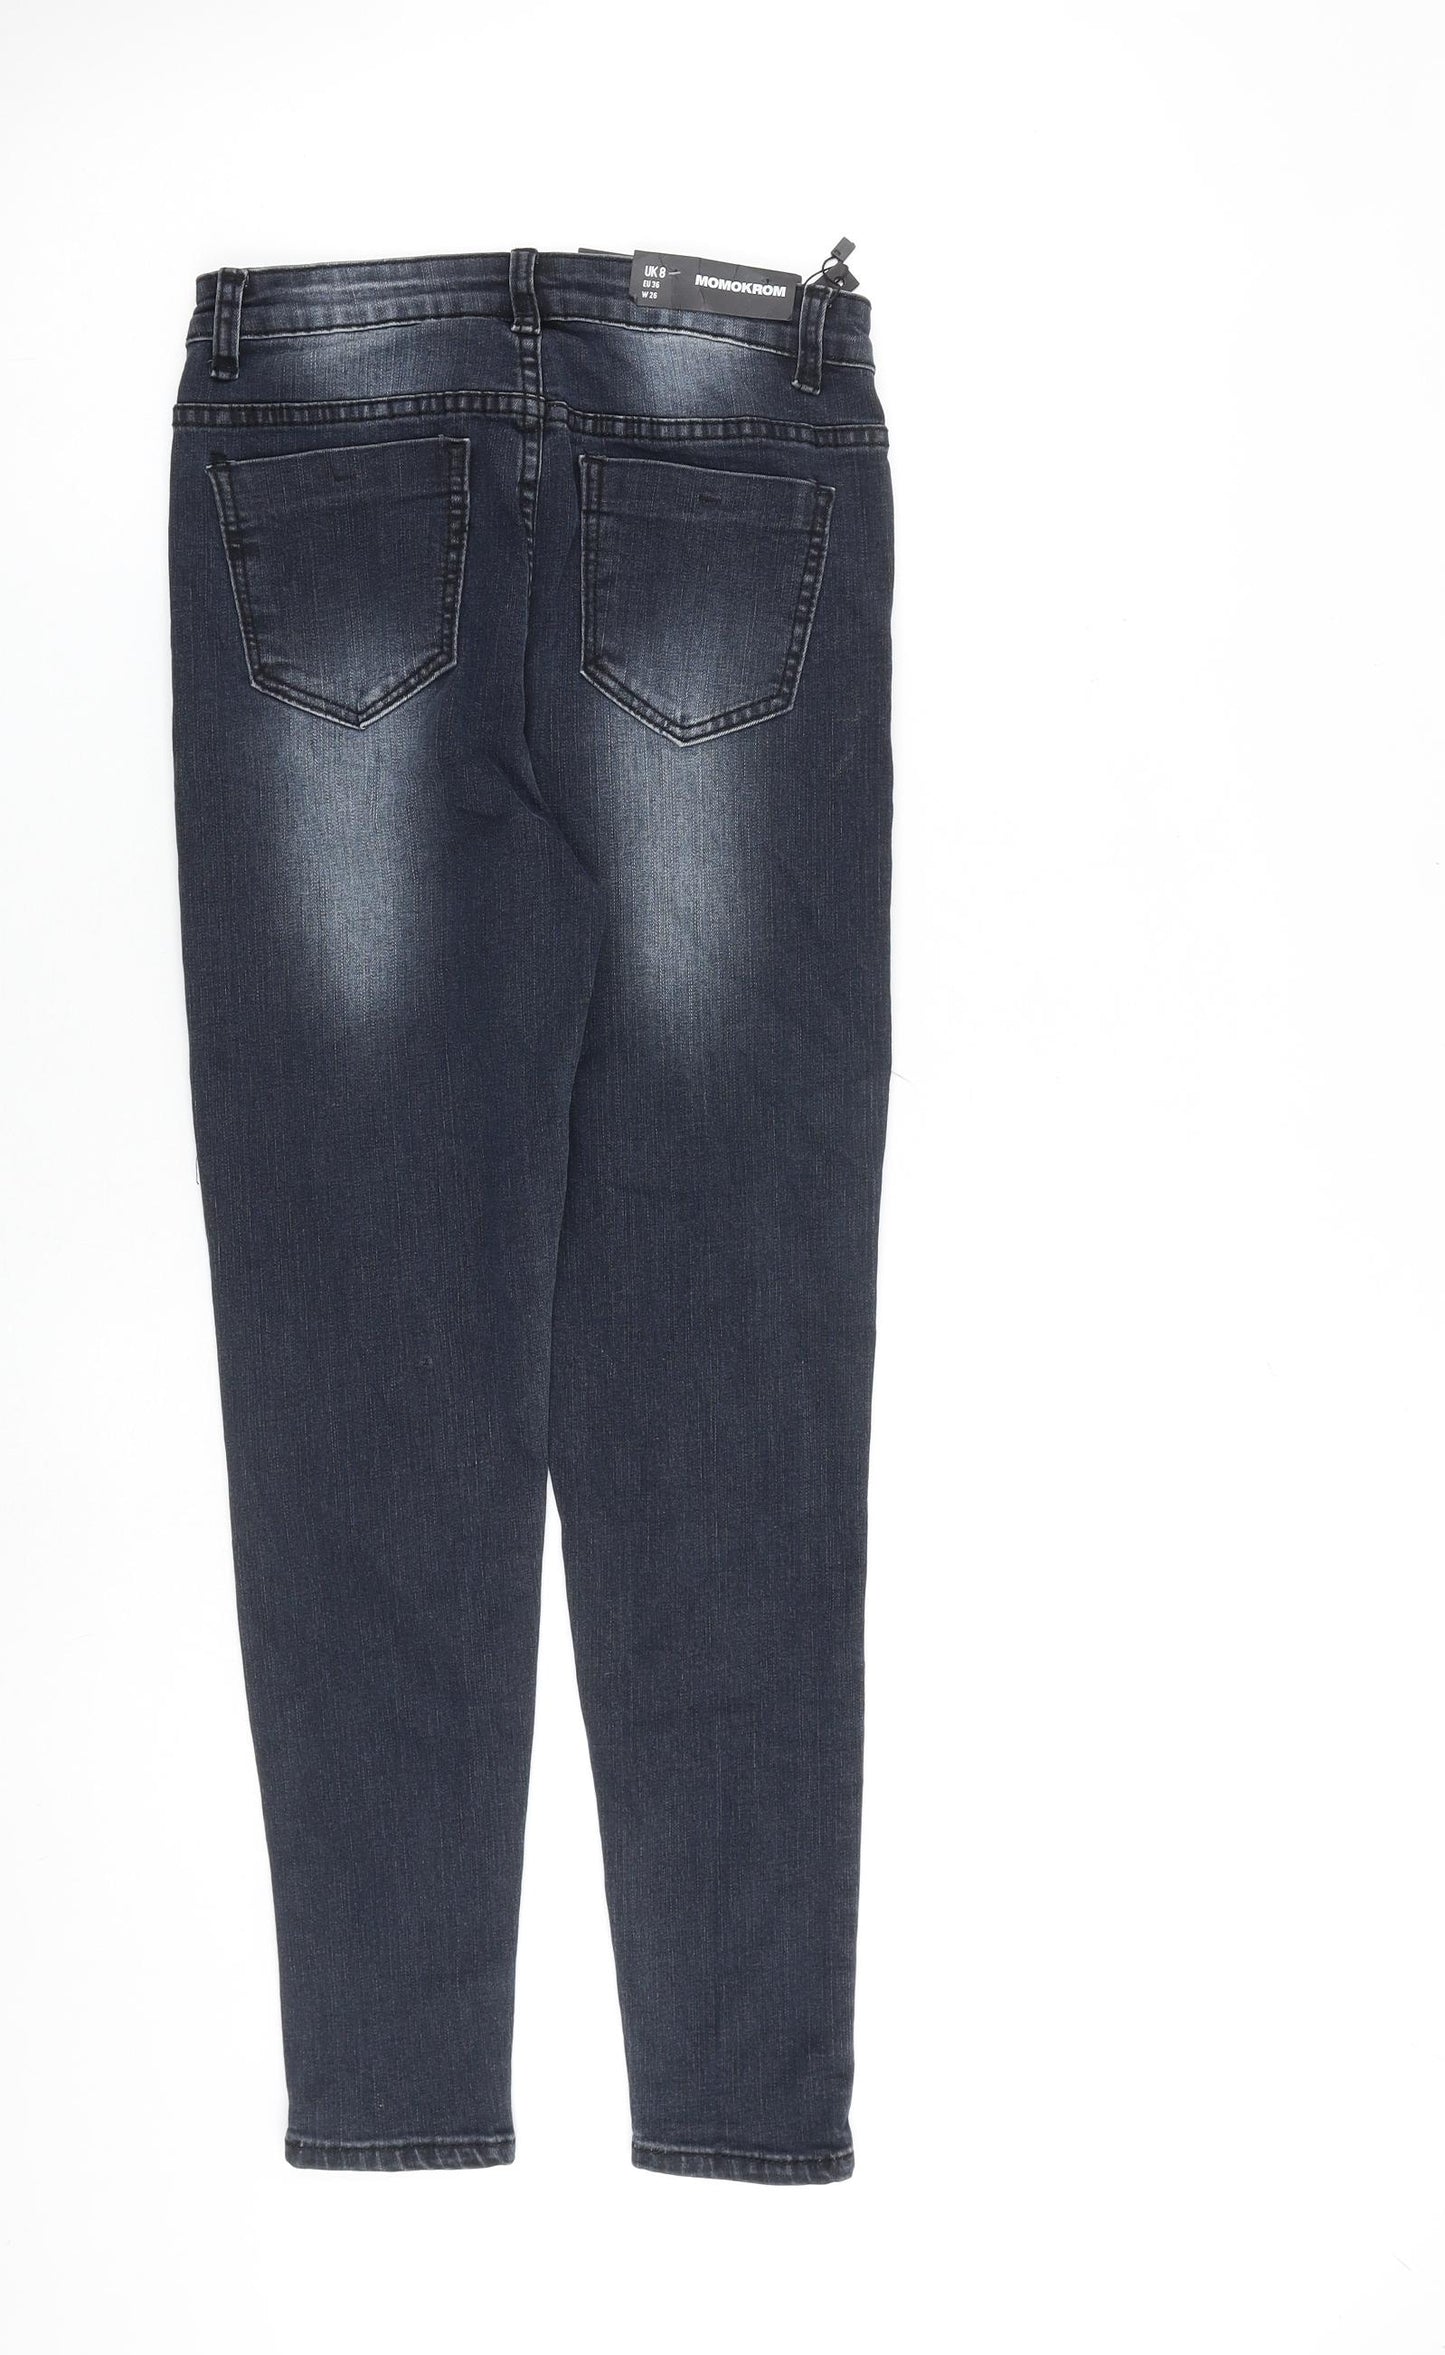 Momokrom Womens Blue Cotton Skinny Jeans Size 8 L26 in Regular Zip